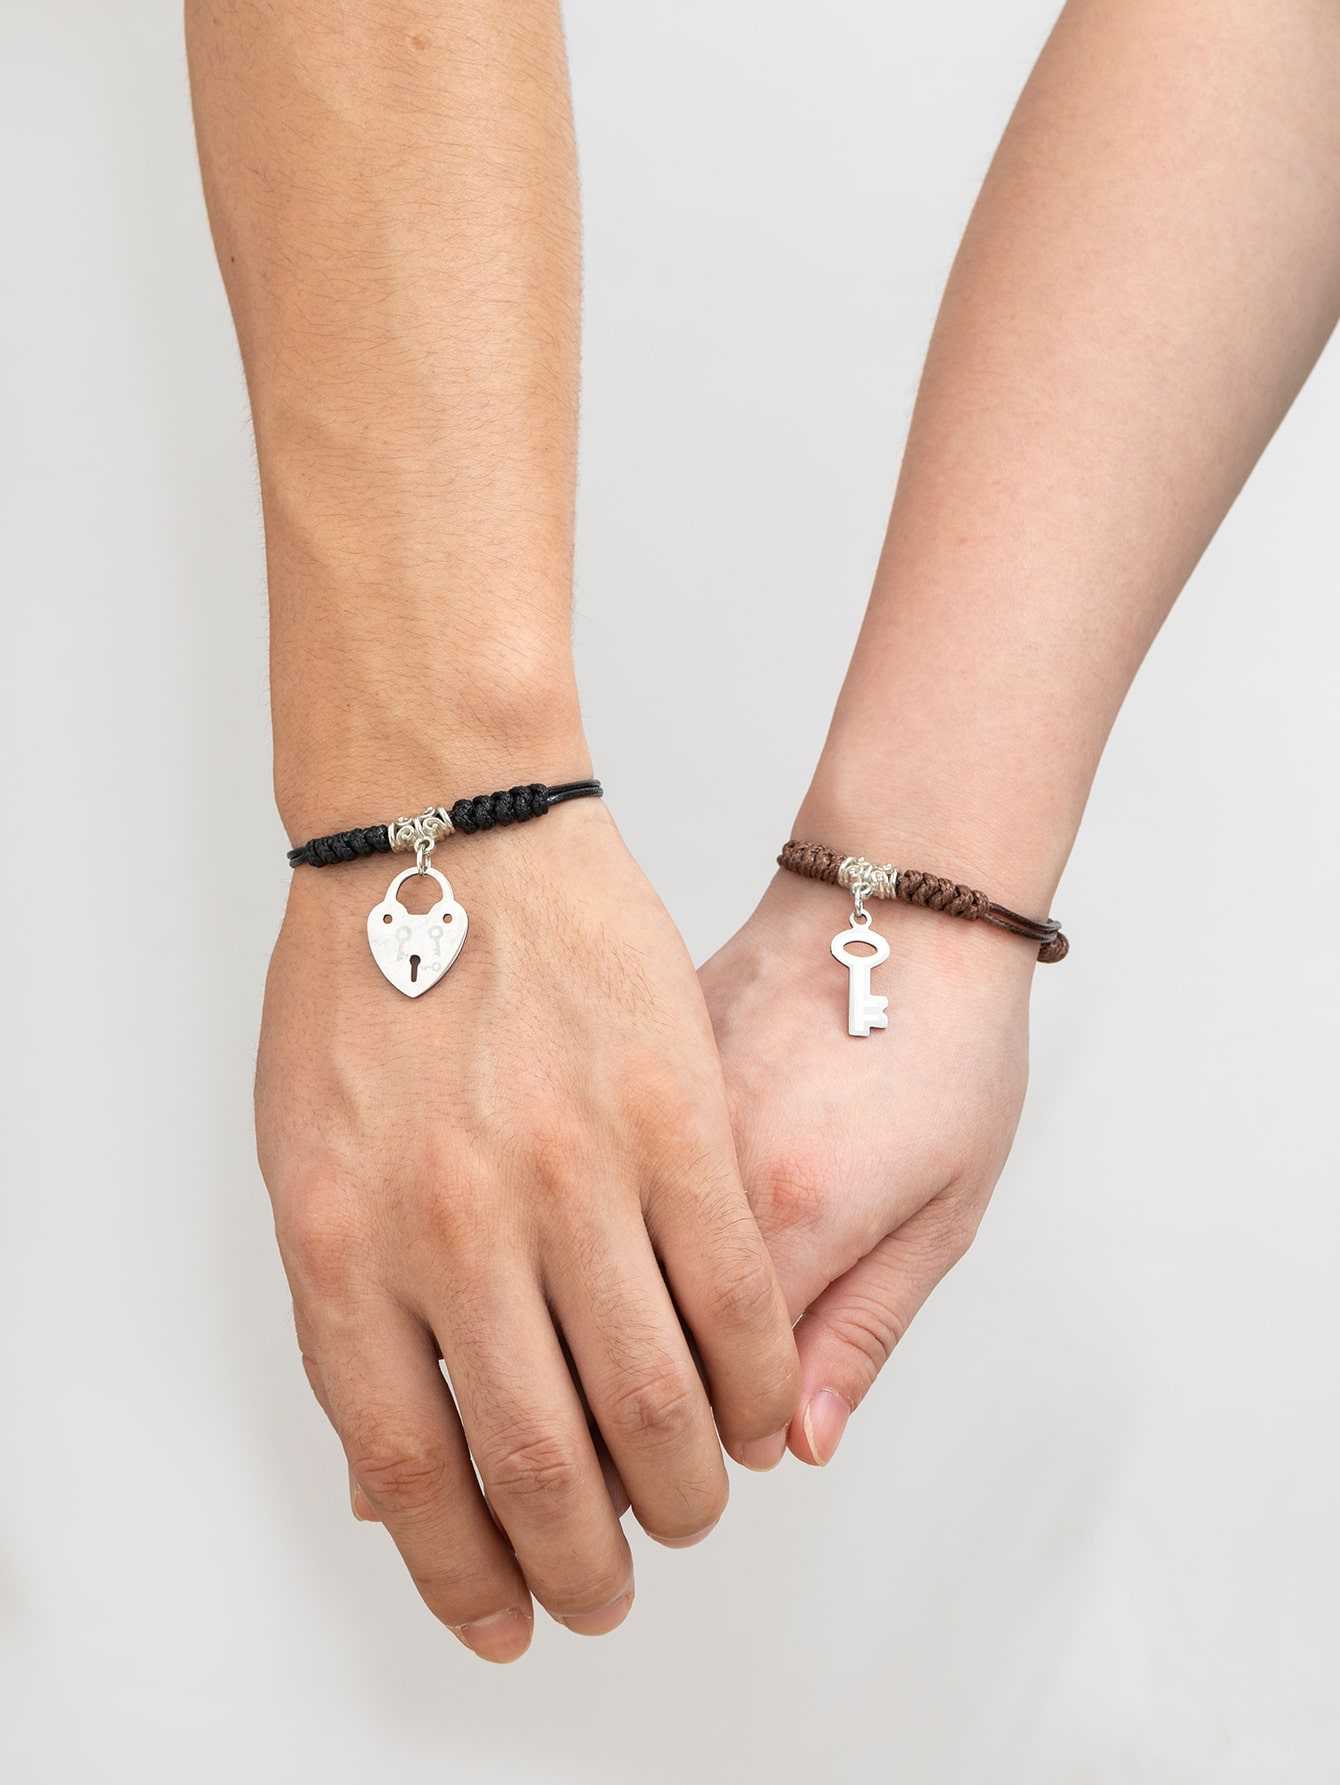 2pcs Couple Key and Lock Charm Bracelet Letter Bracelet Engraving Bracelet  Friendship Jewelry Handmade Matching Bracelet